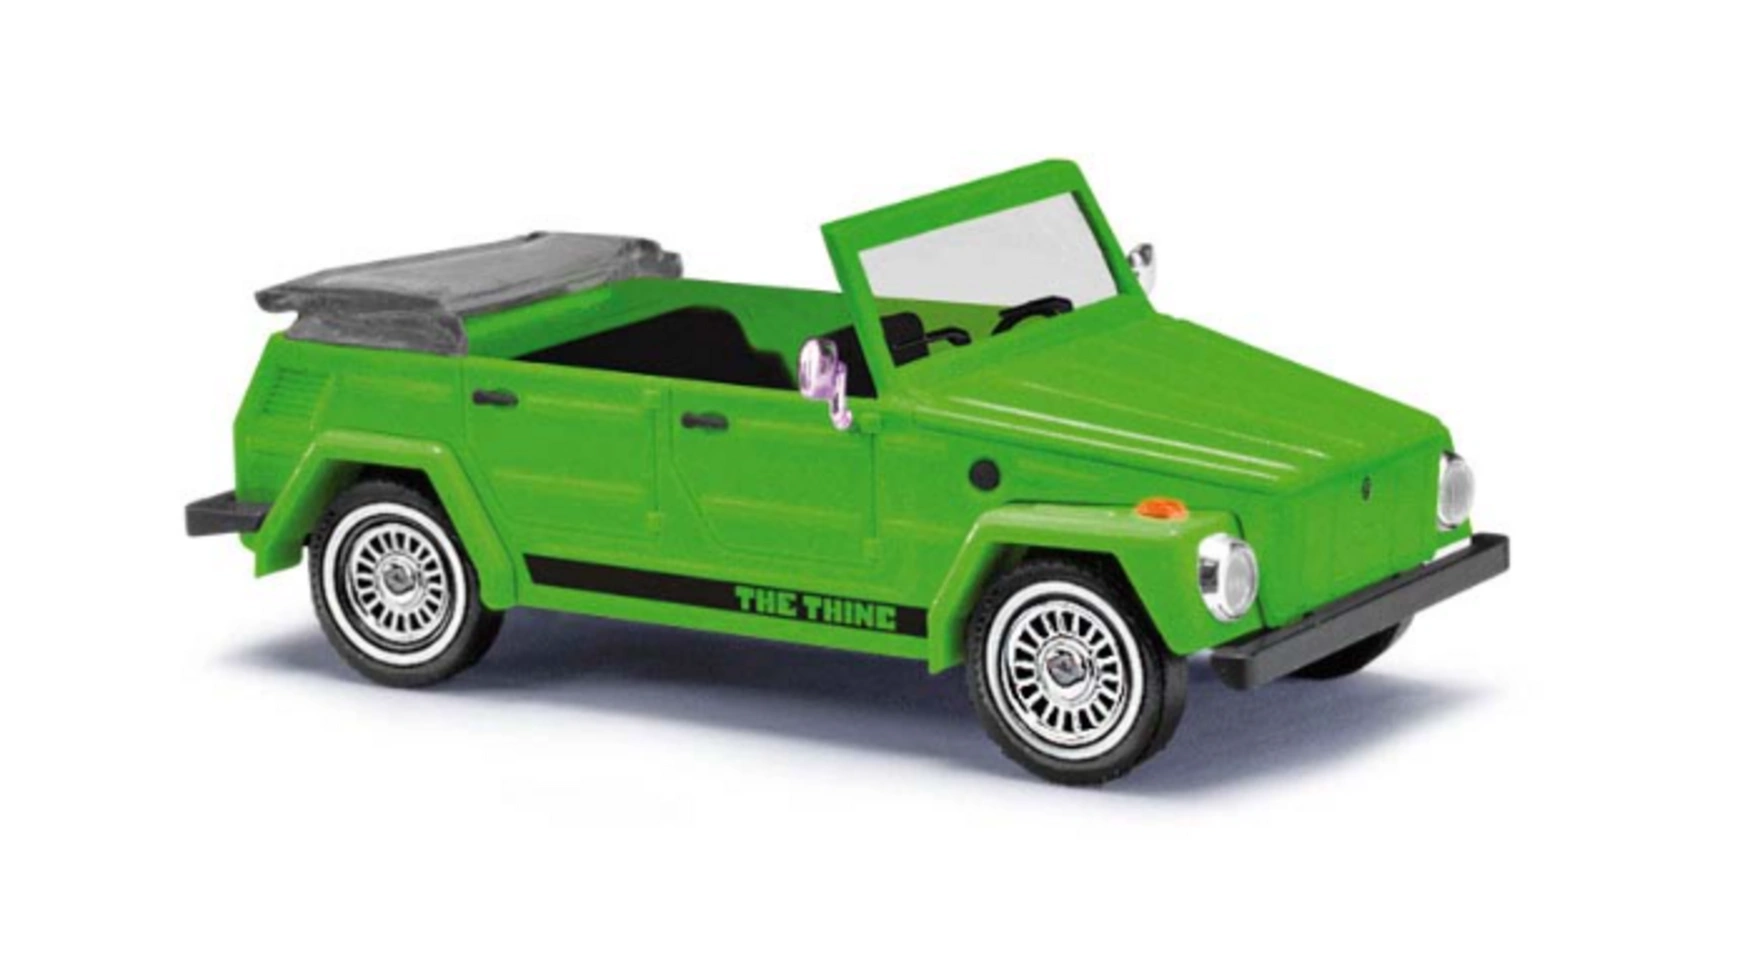 Busch Modellspielwaren 1:87 VW 181 курьерский автомобиль The Thing, неоново-зеленый